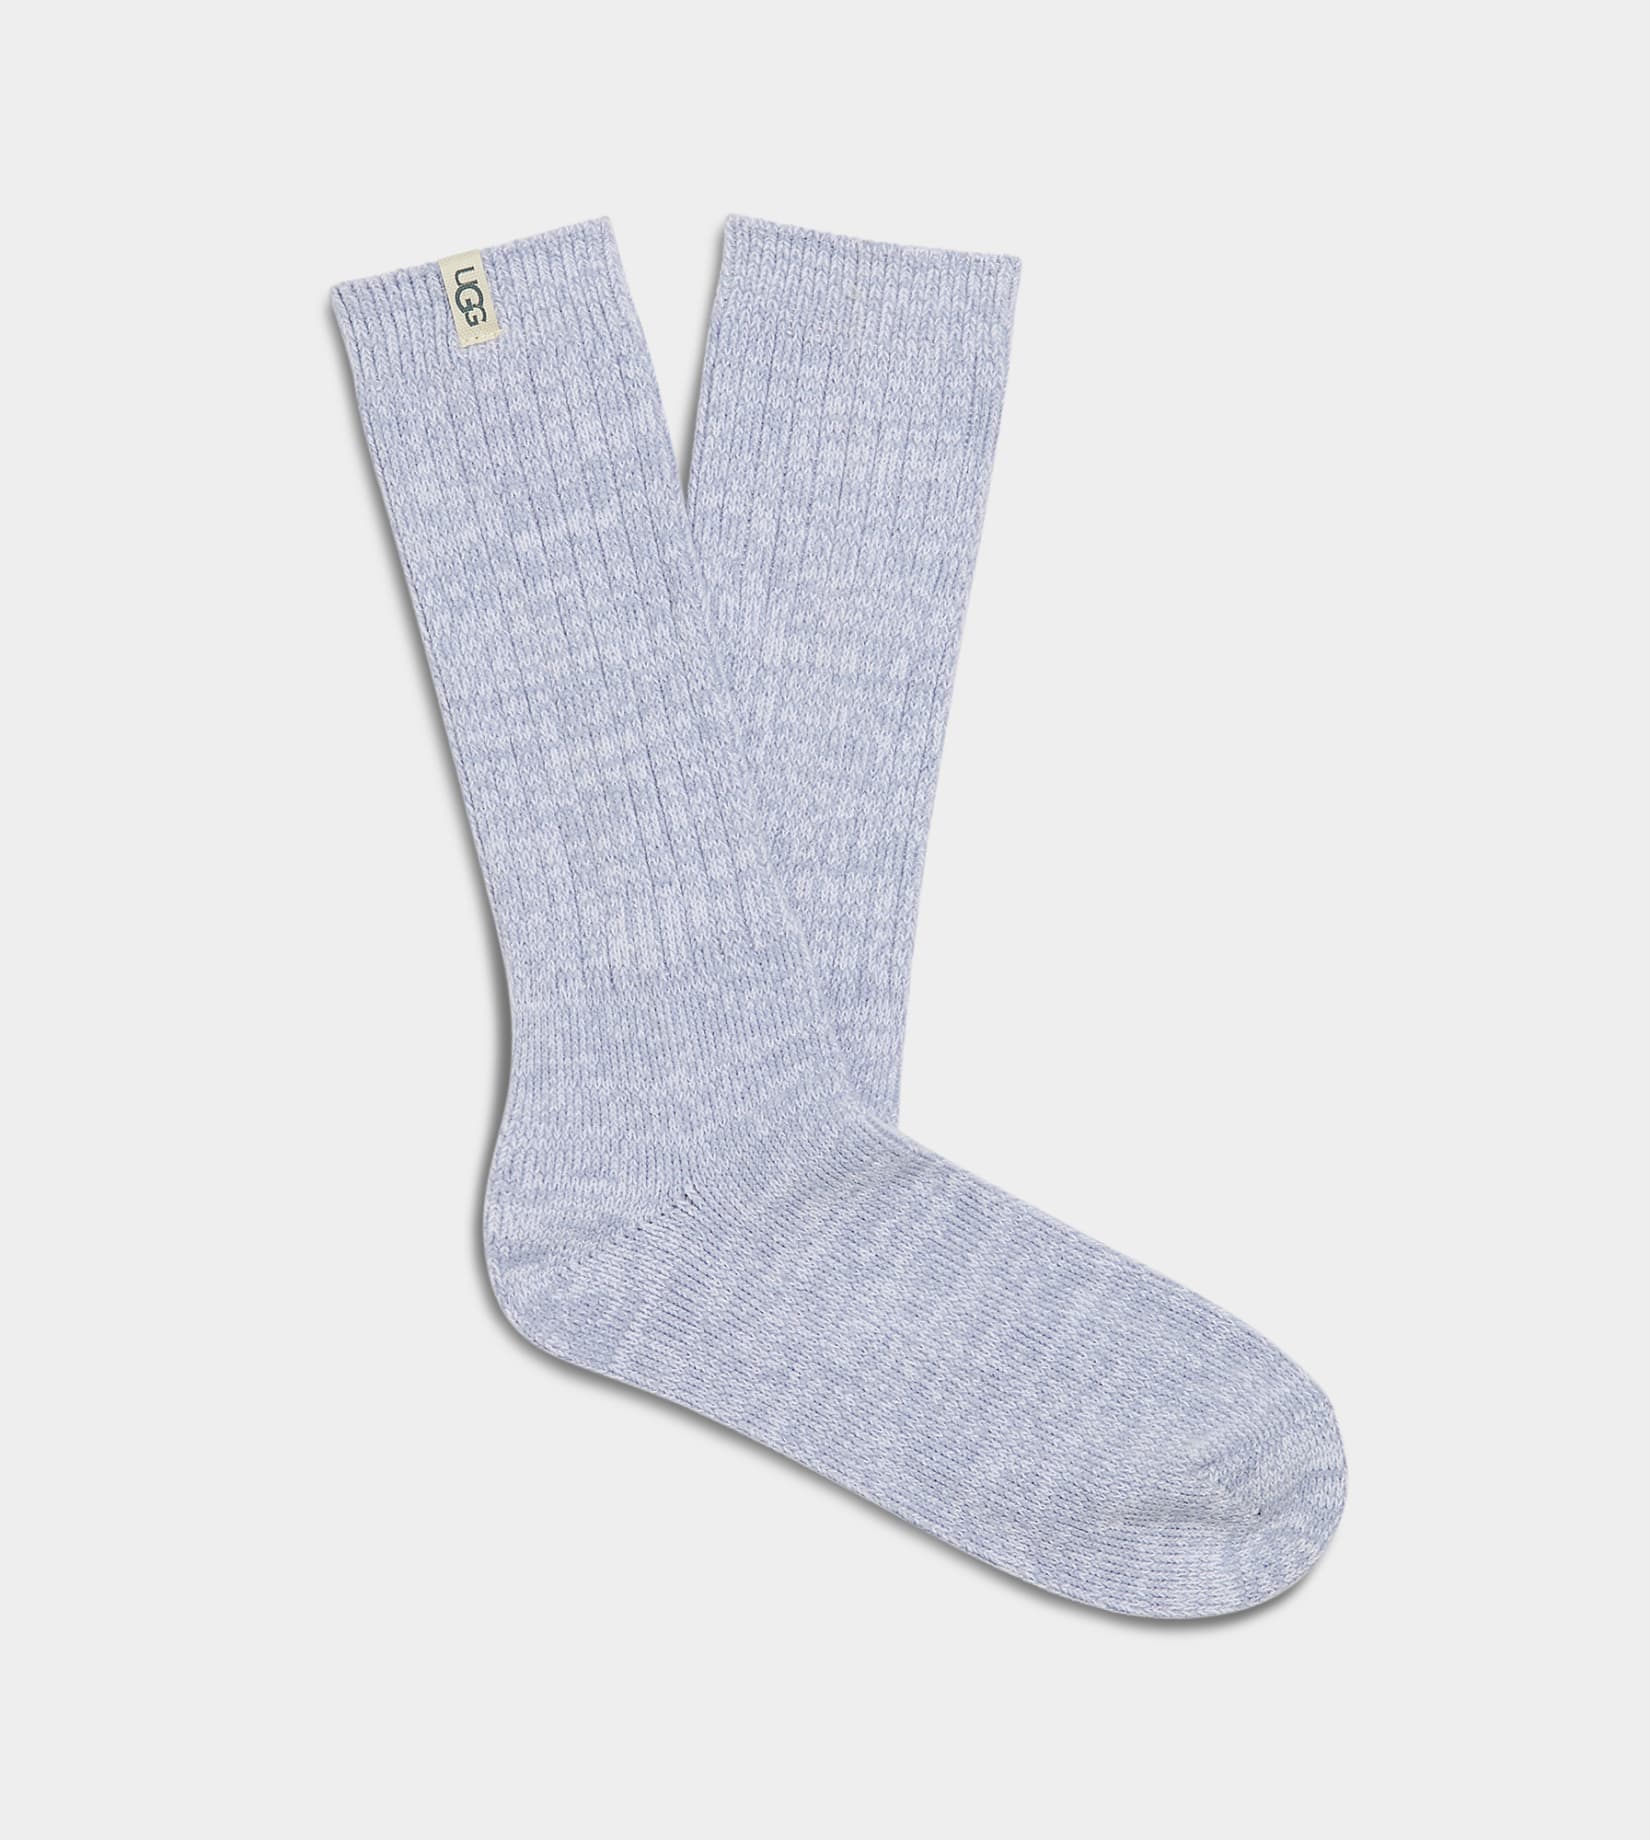 Plus Size trouser socks 3 pack pattern womens socks